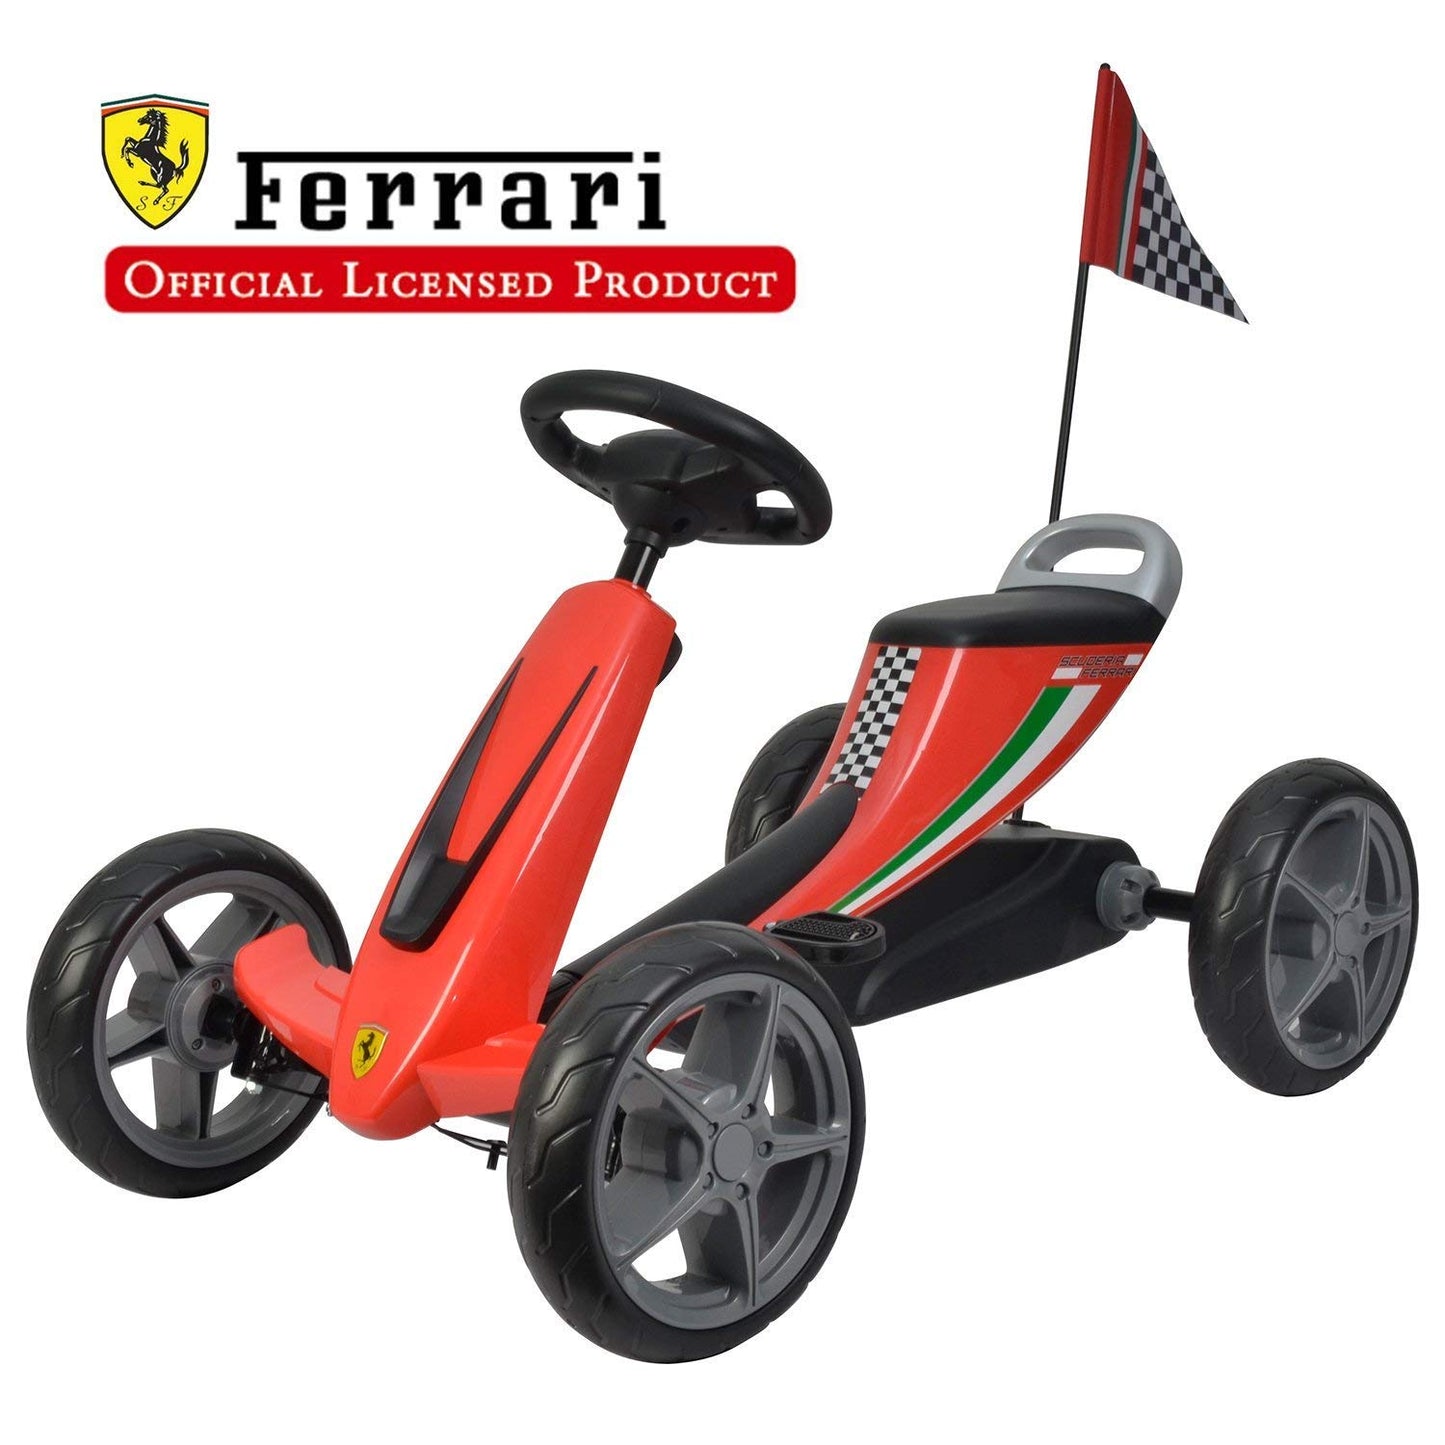 Ferrari Pedal Go-Cart